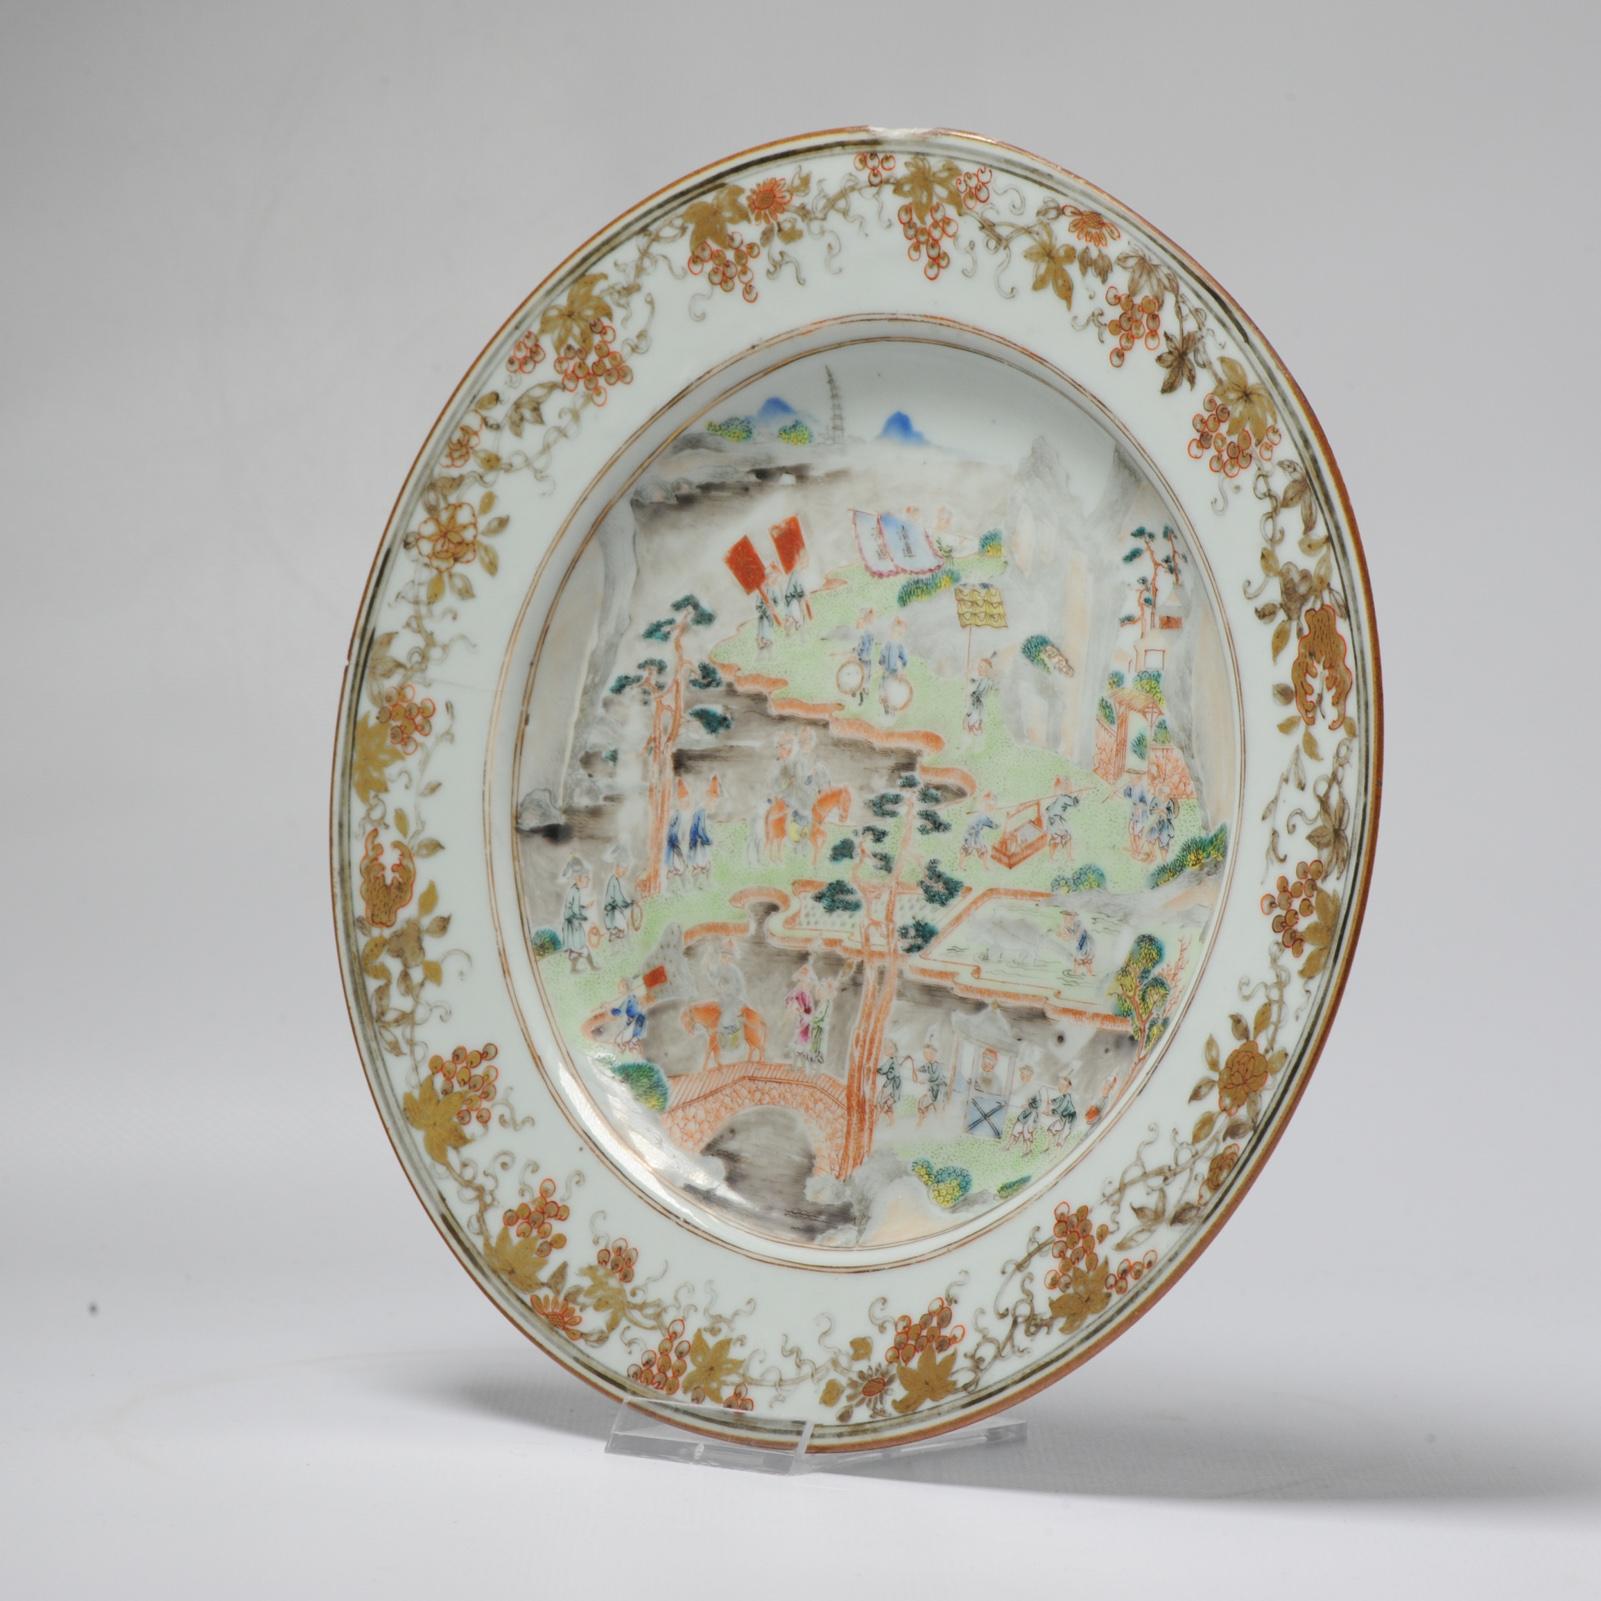 Antique 18th C Chinese Porcelain Fencai Dish China Famille Rose Qianlong Period 1